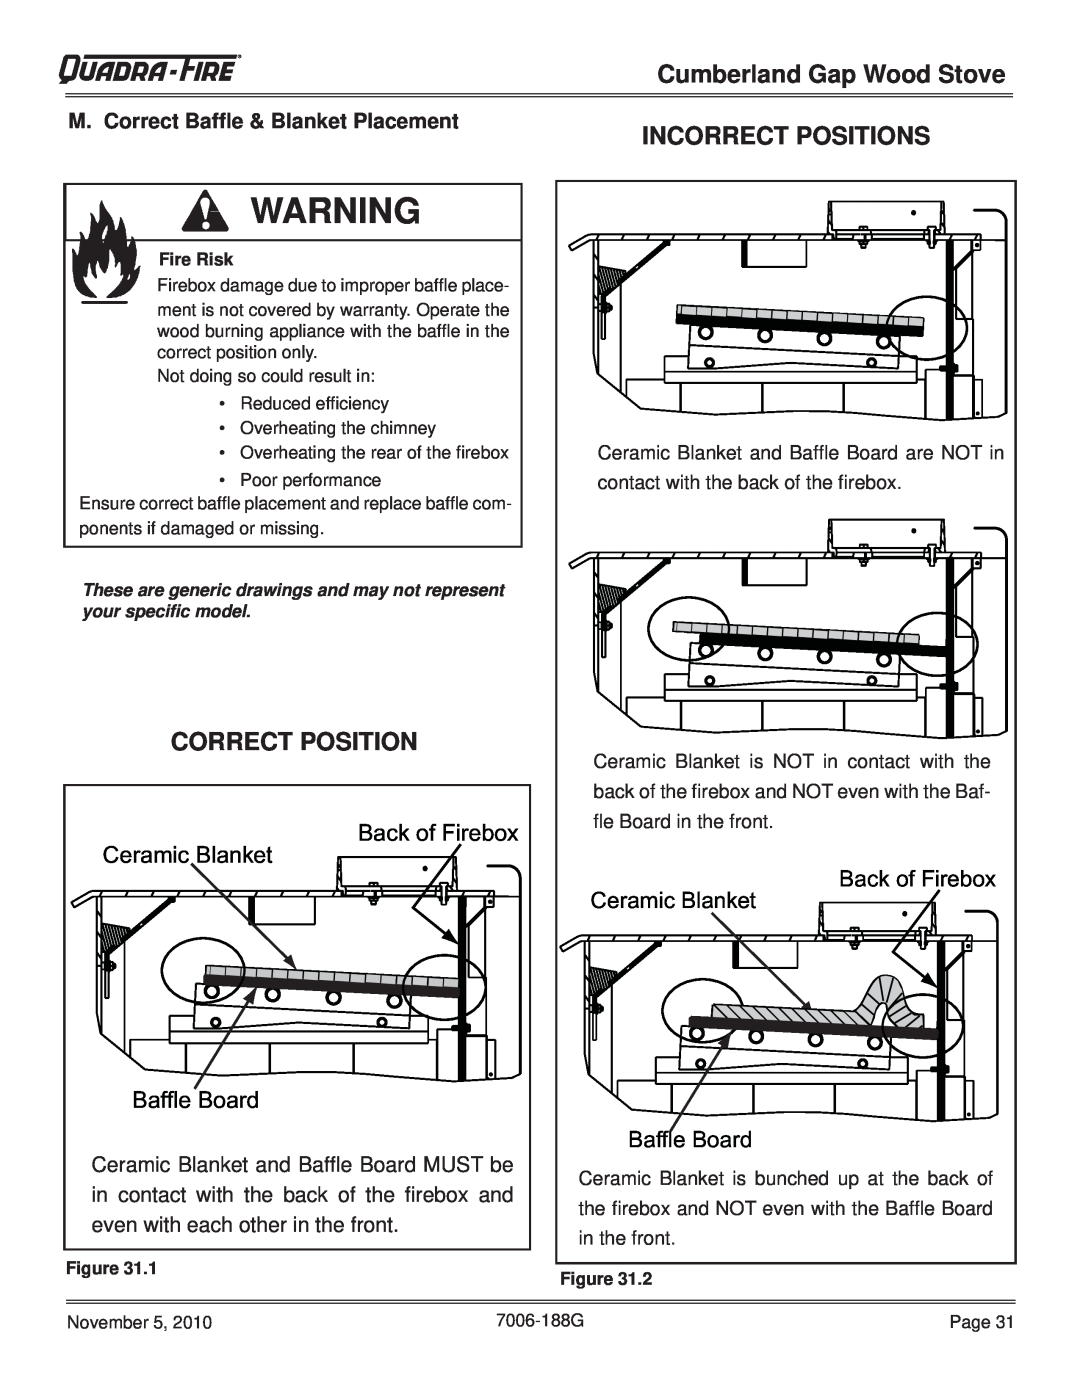 Quadra-Fire CUMBGAP-MBK, CUMPGAP-PMH warranty Incorrect Positions, Correct Position, M. Correct Bafﬂe & Blanket Placement 